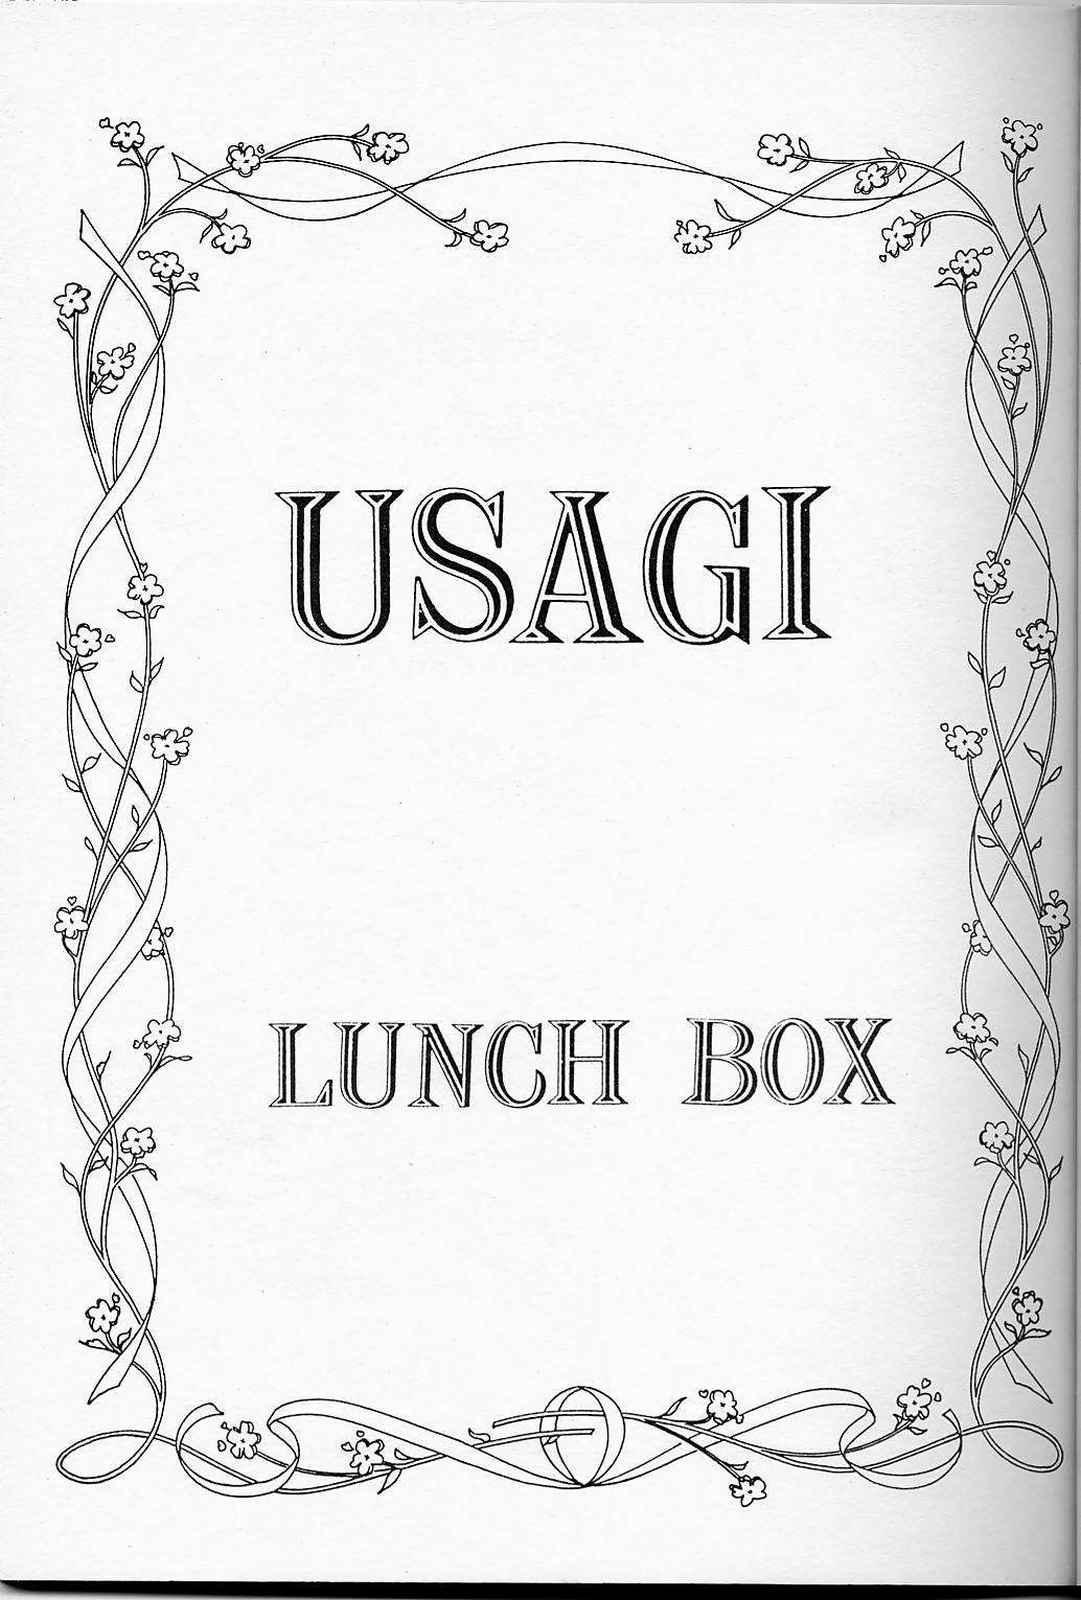 Lunch Box 6 - Usagi 1